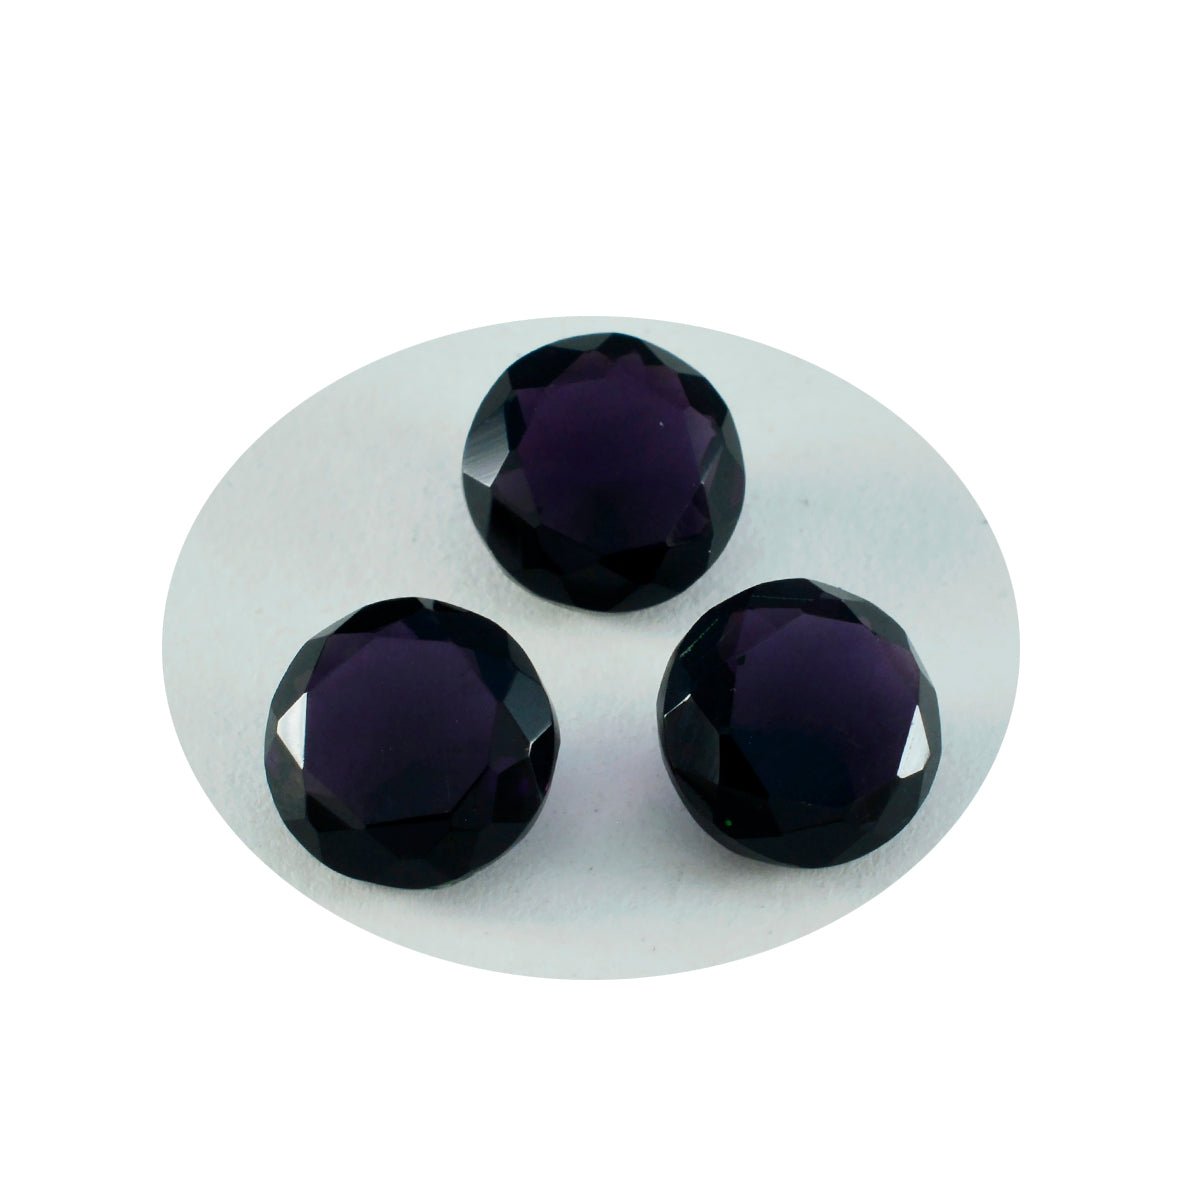 riyogems 1 pz ametista viola cz sfaccettato 15x15 mm forma rotonda gemme sfuse di grande qualità